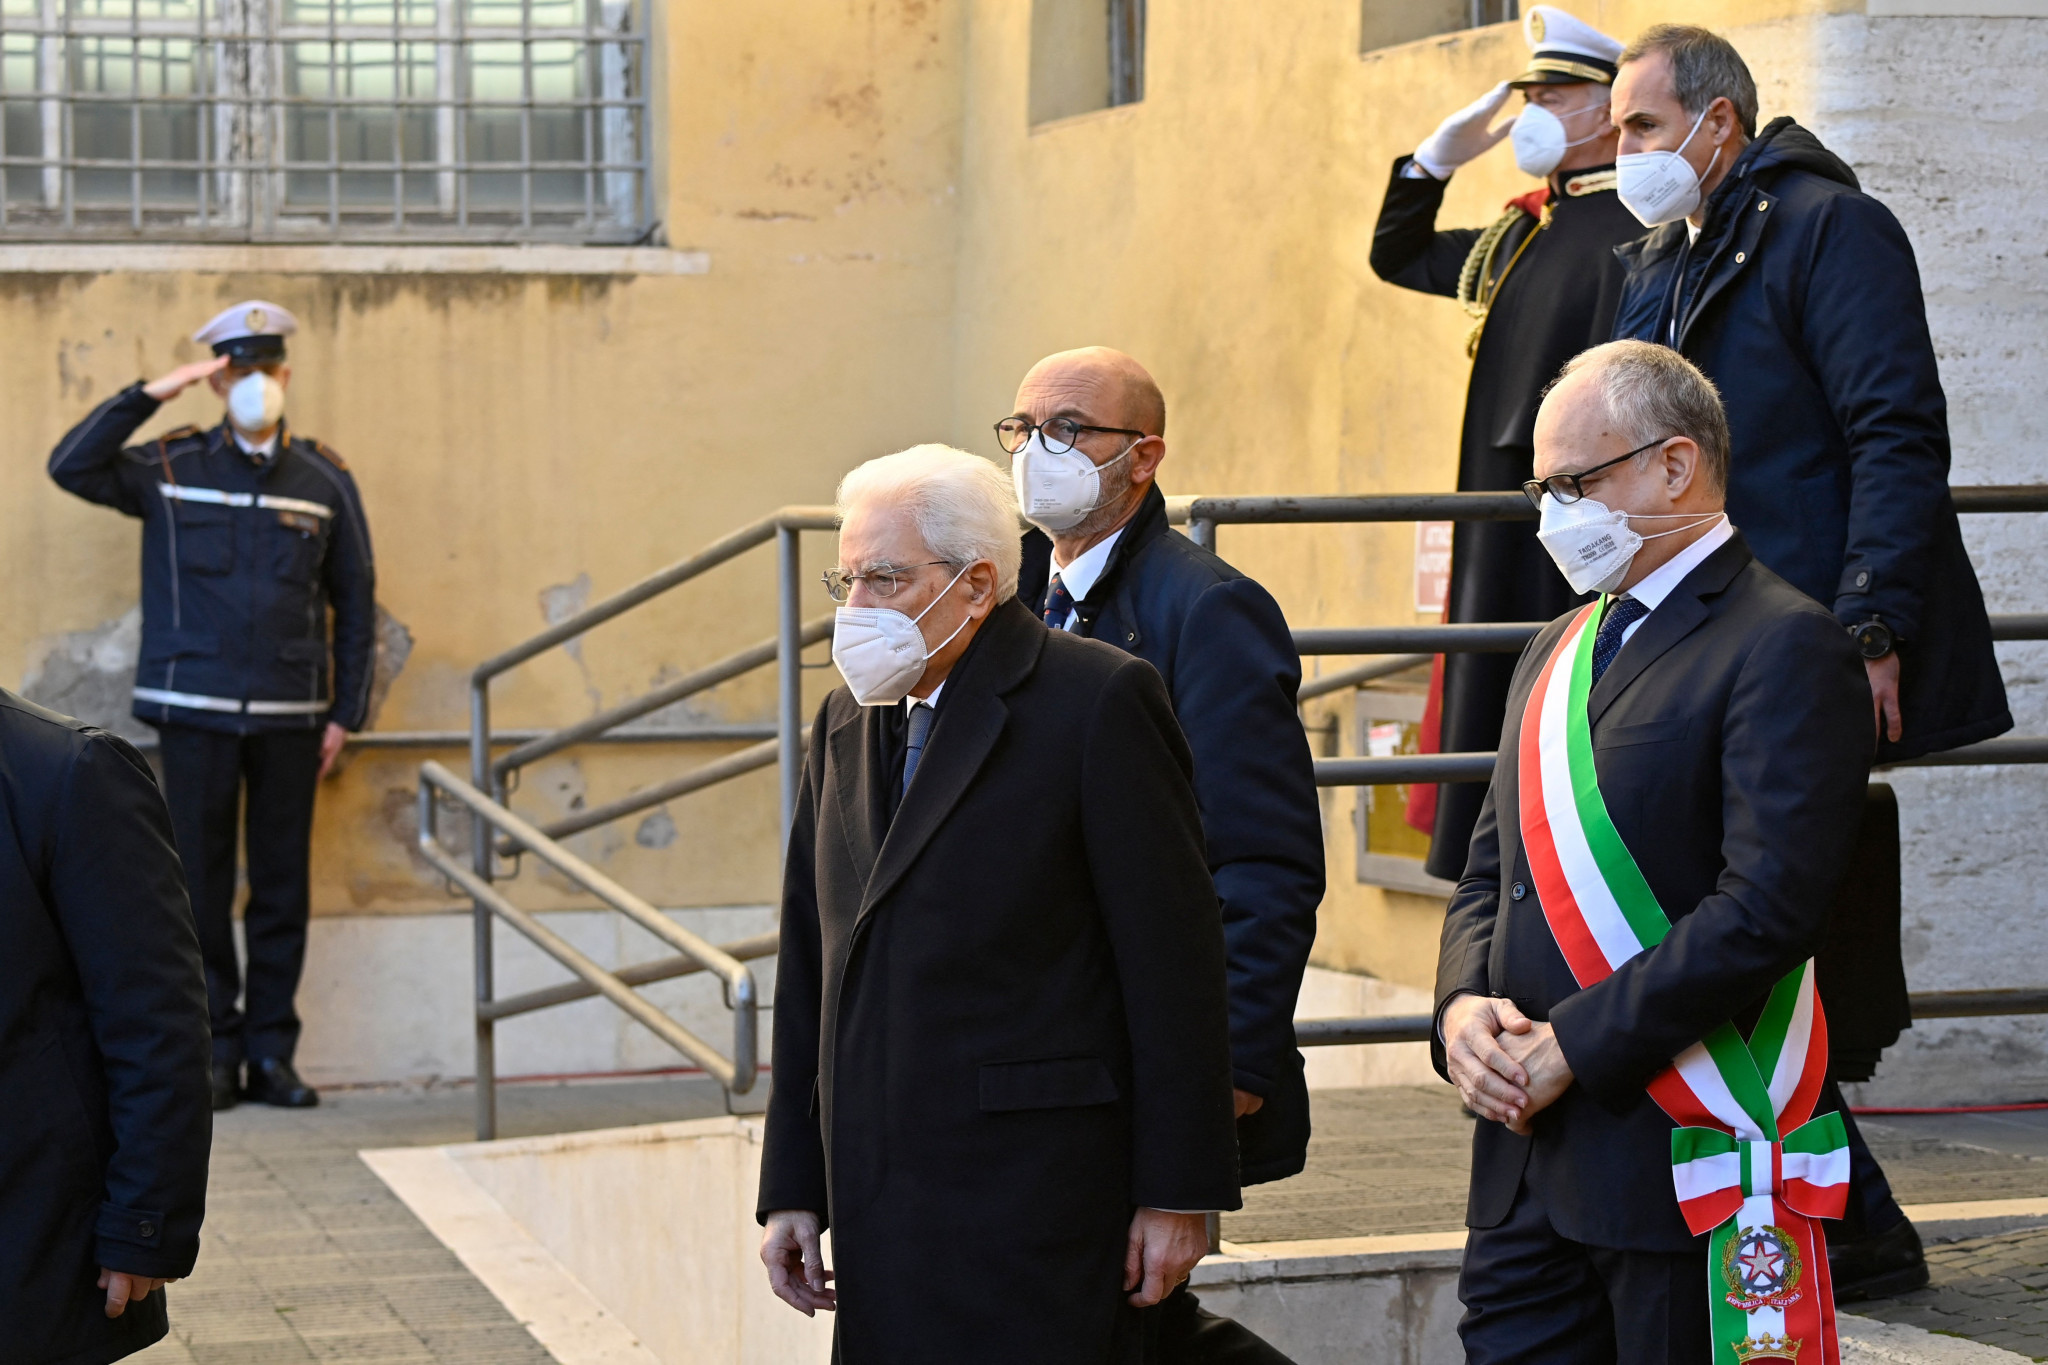 Mattarella re-elected Italian President in stability boost for Milan Cortina 2026